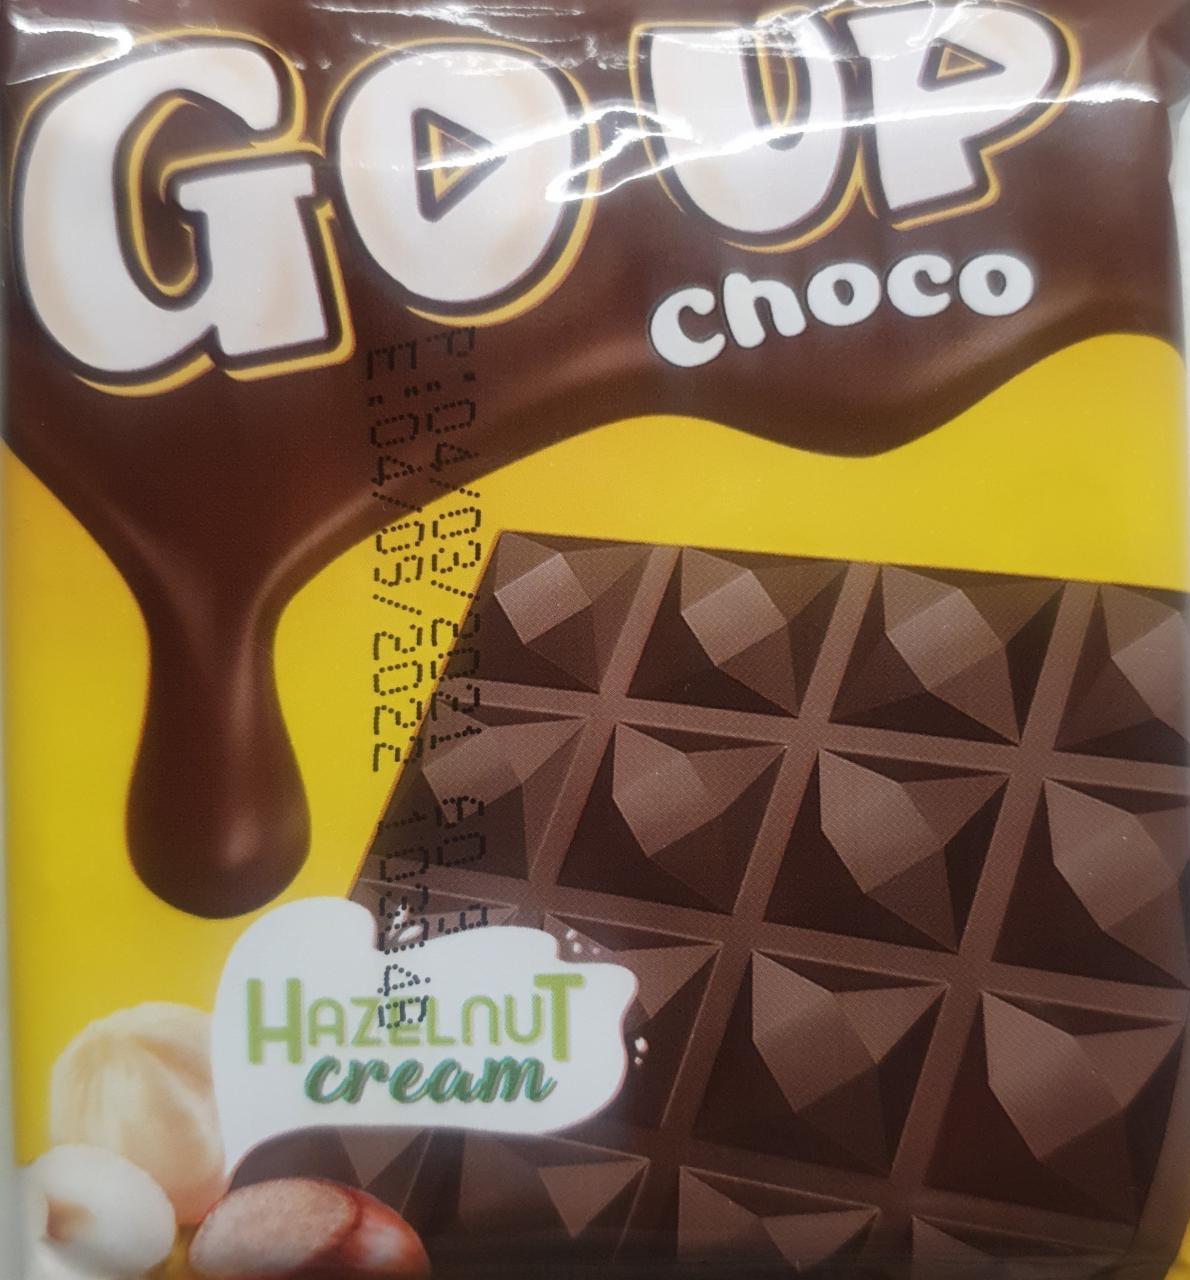 Fotografie - Čokoláda Go Up choco hazelnut cream